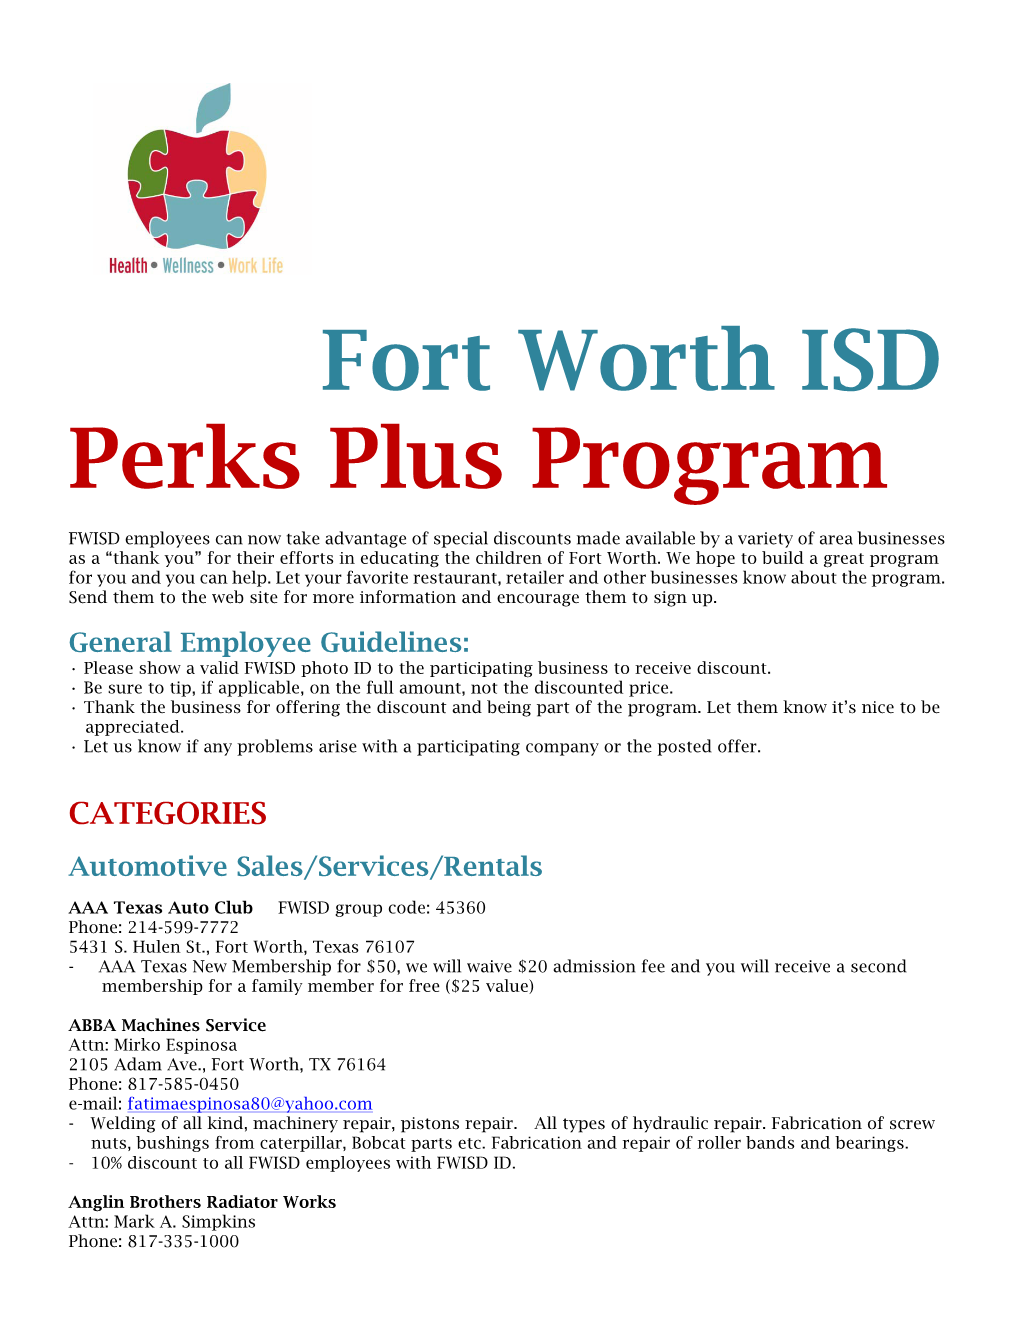 Fort Worth ISD Perks Plus Program